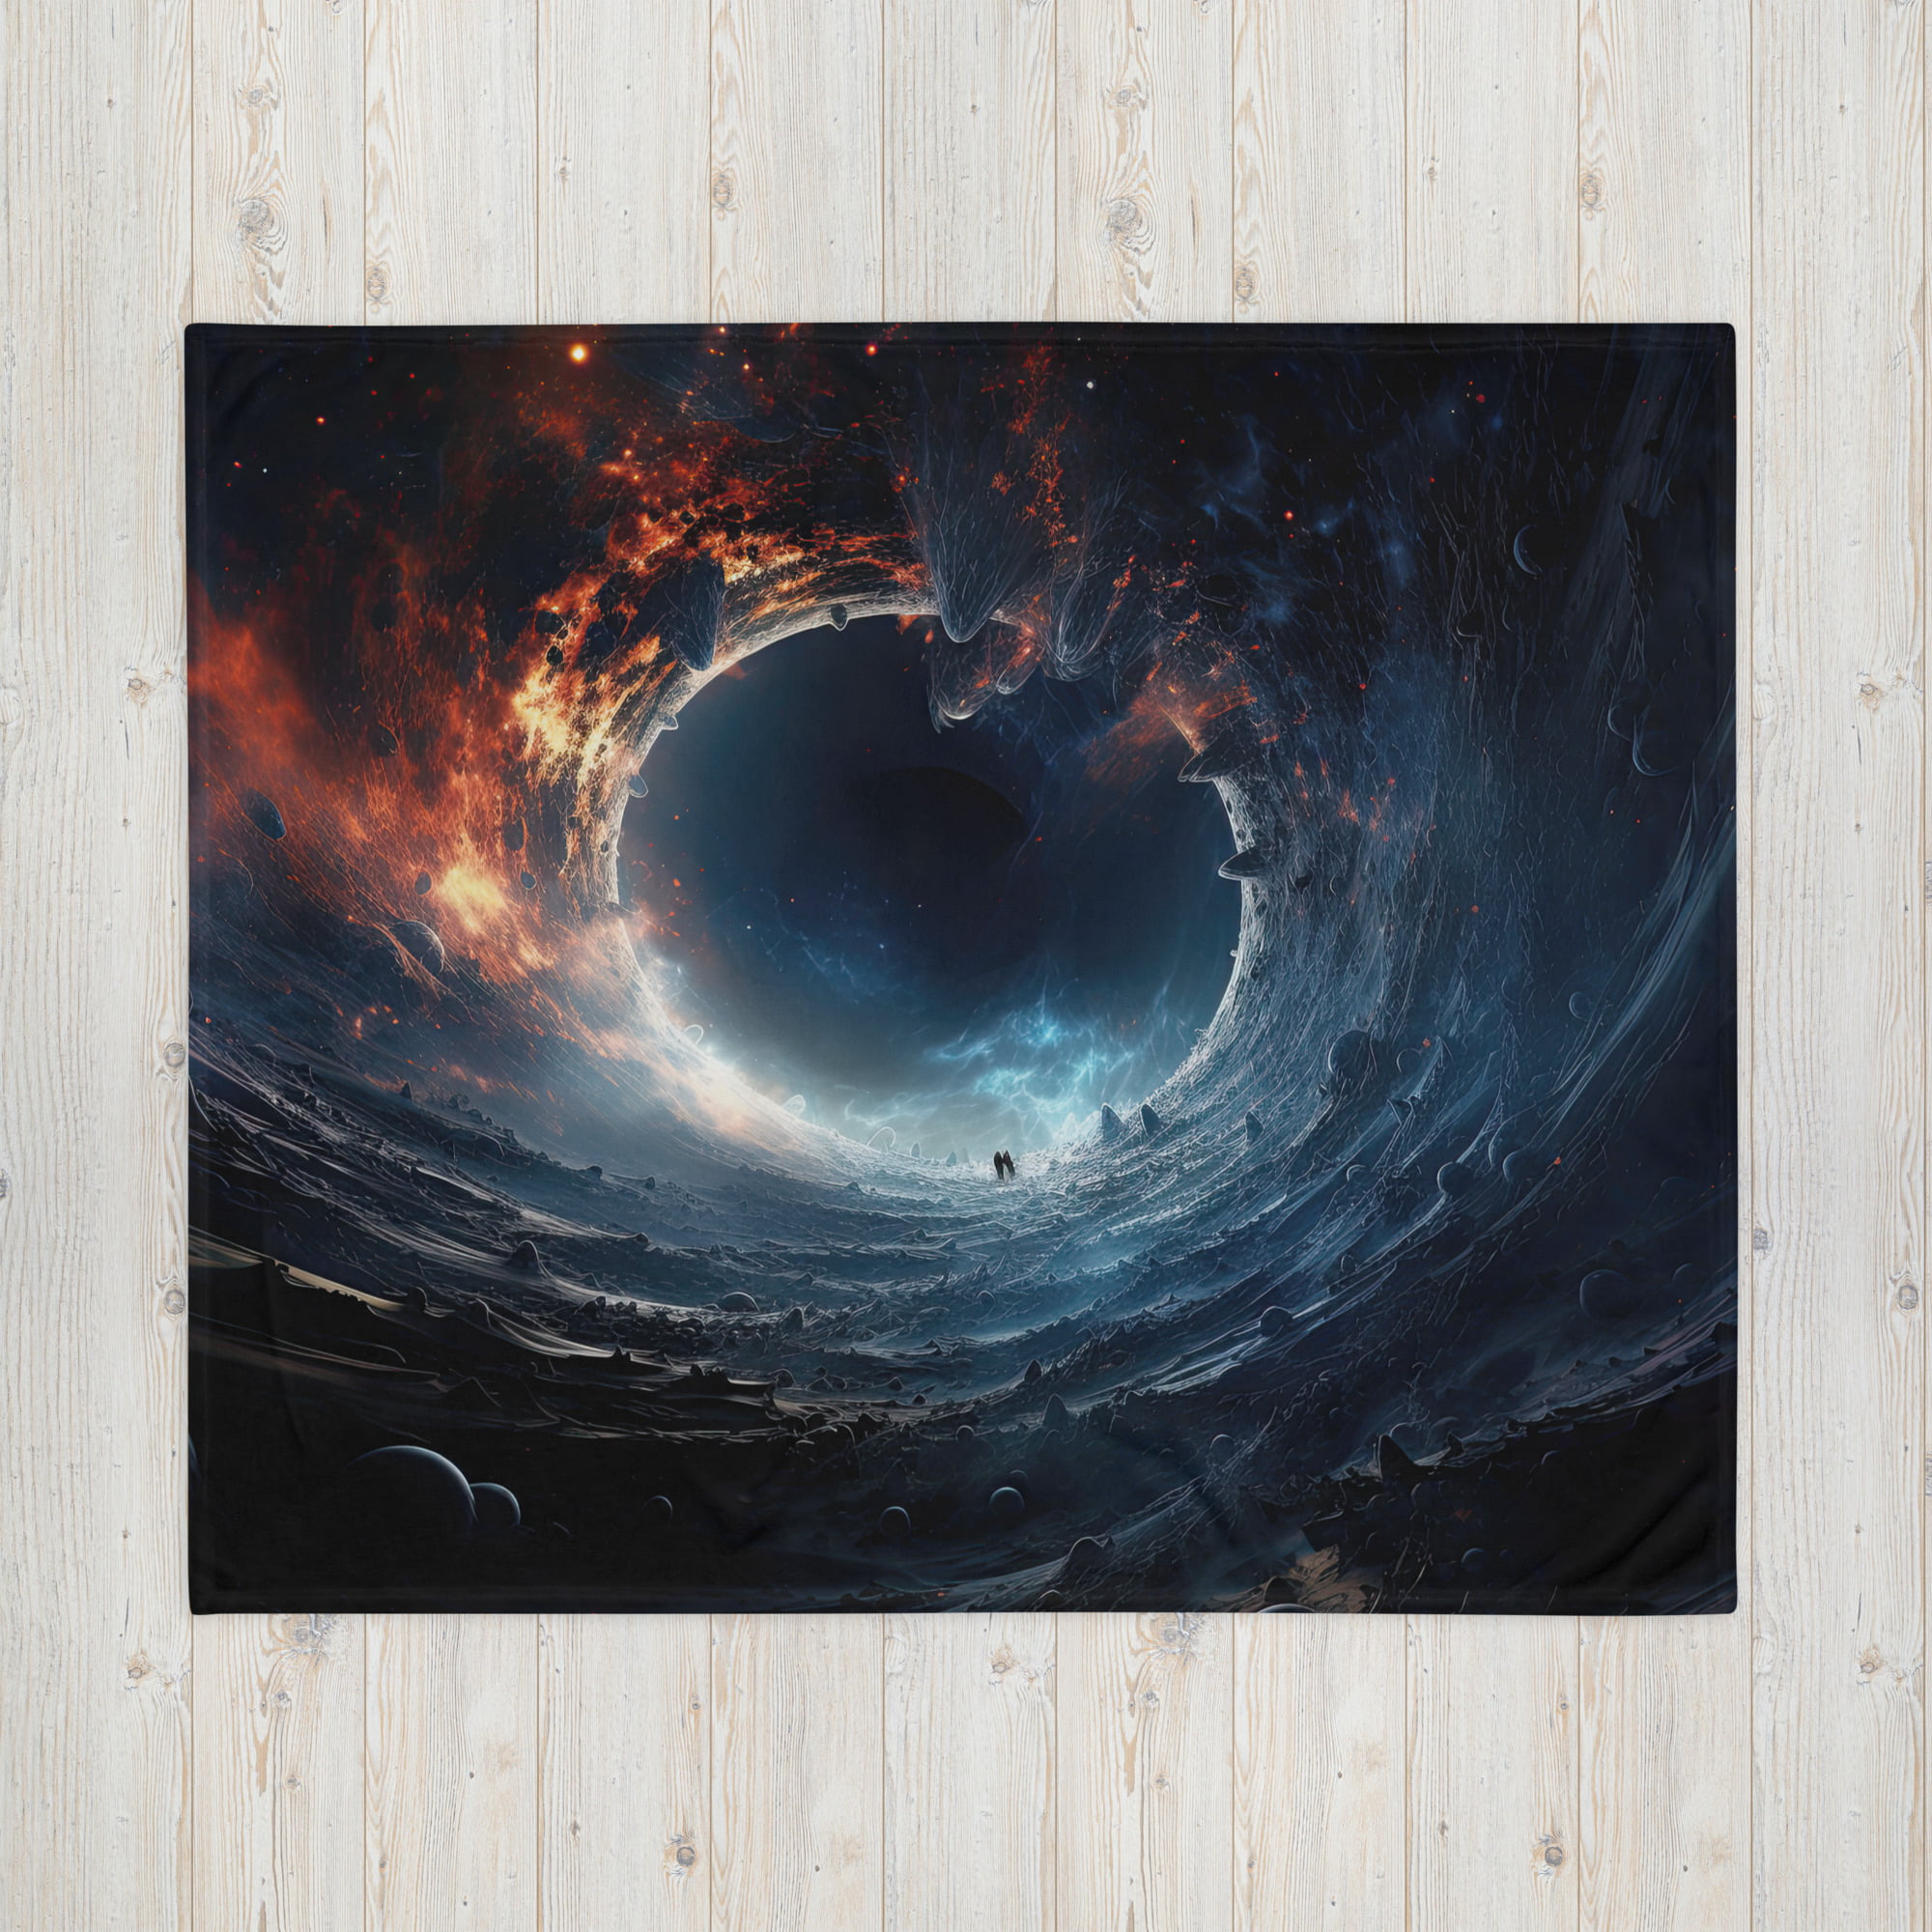 Black Hole Event Horizon Throw Blanket – 50×60